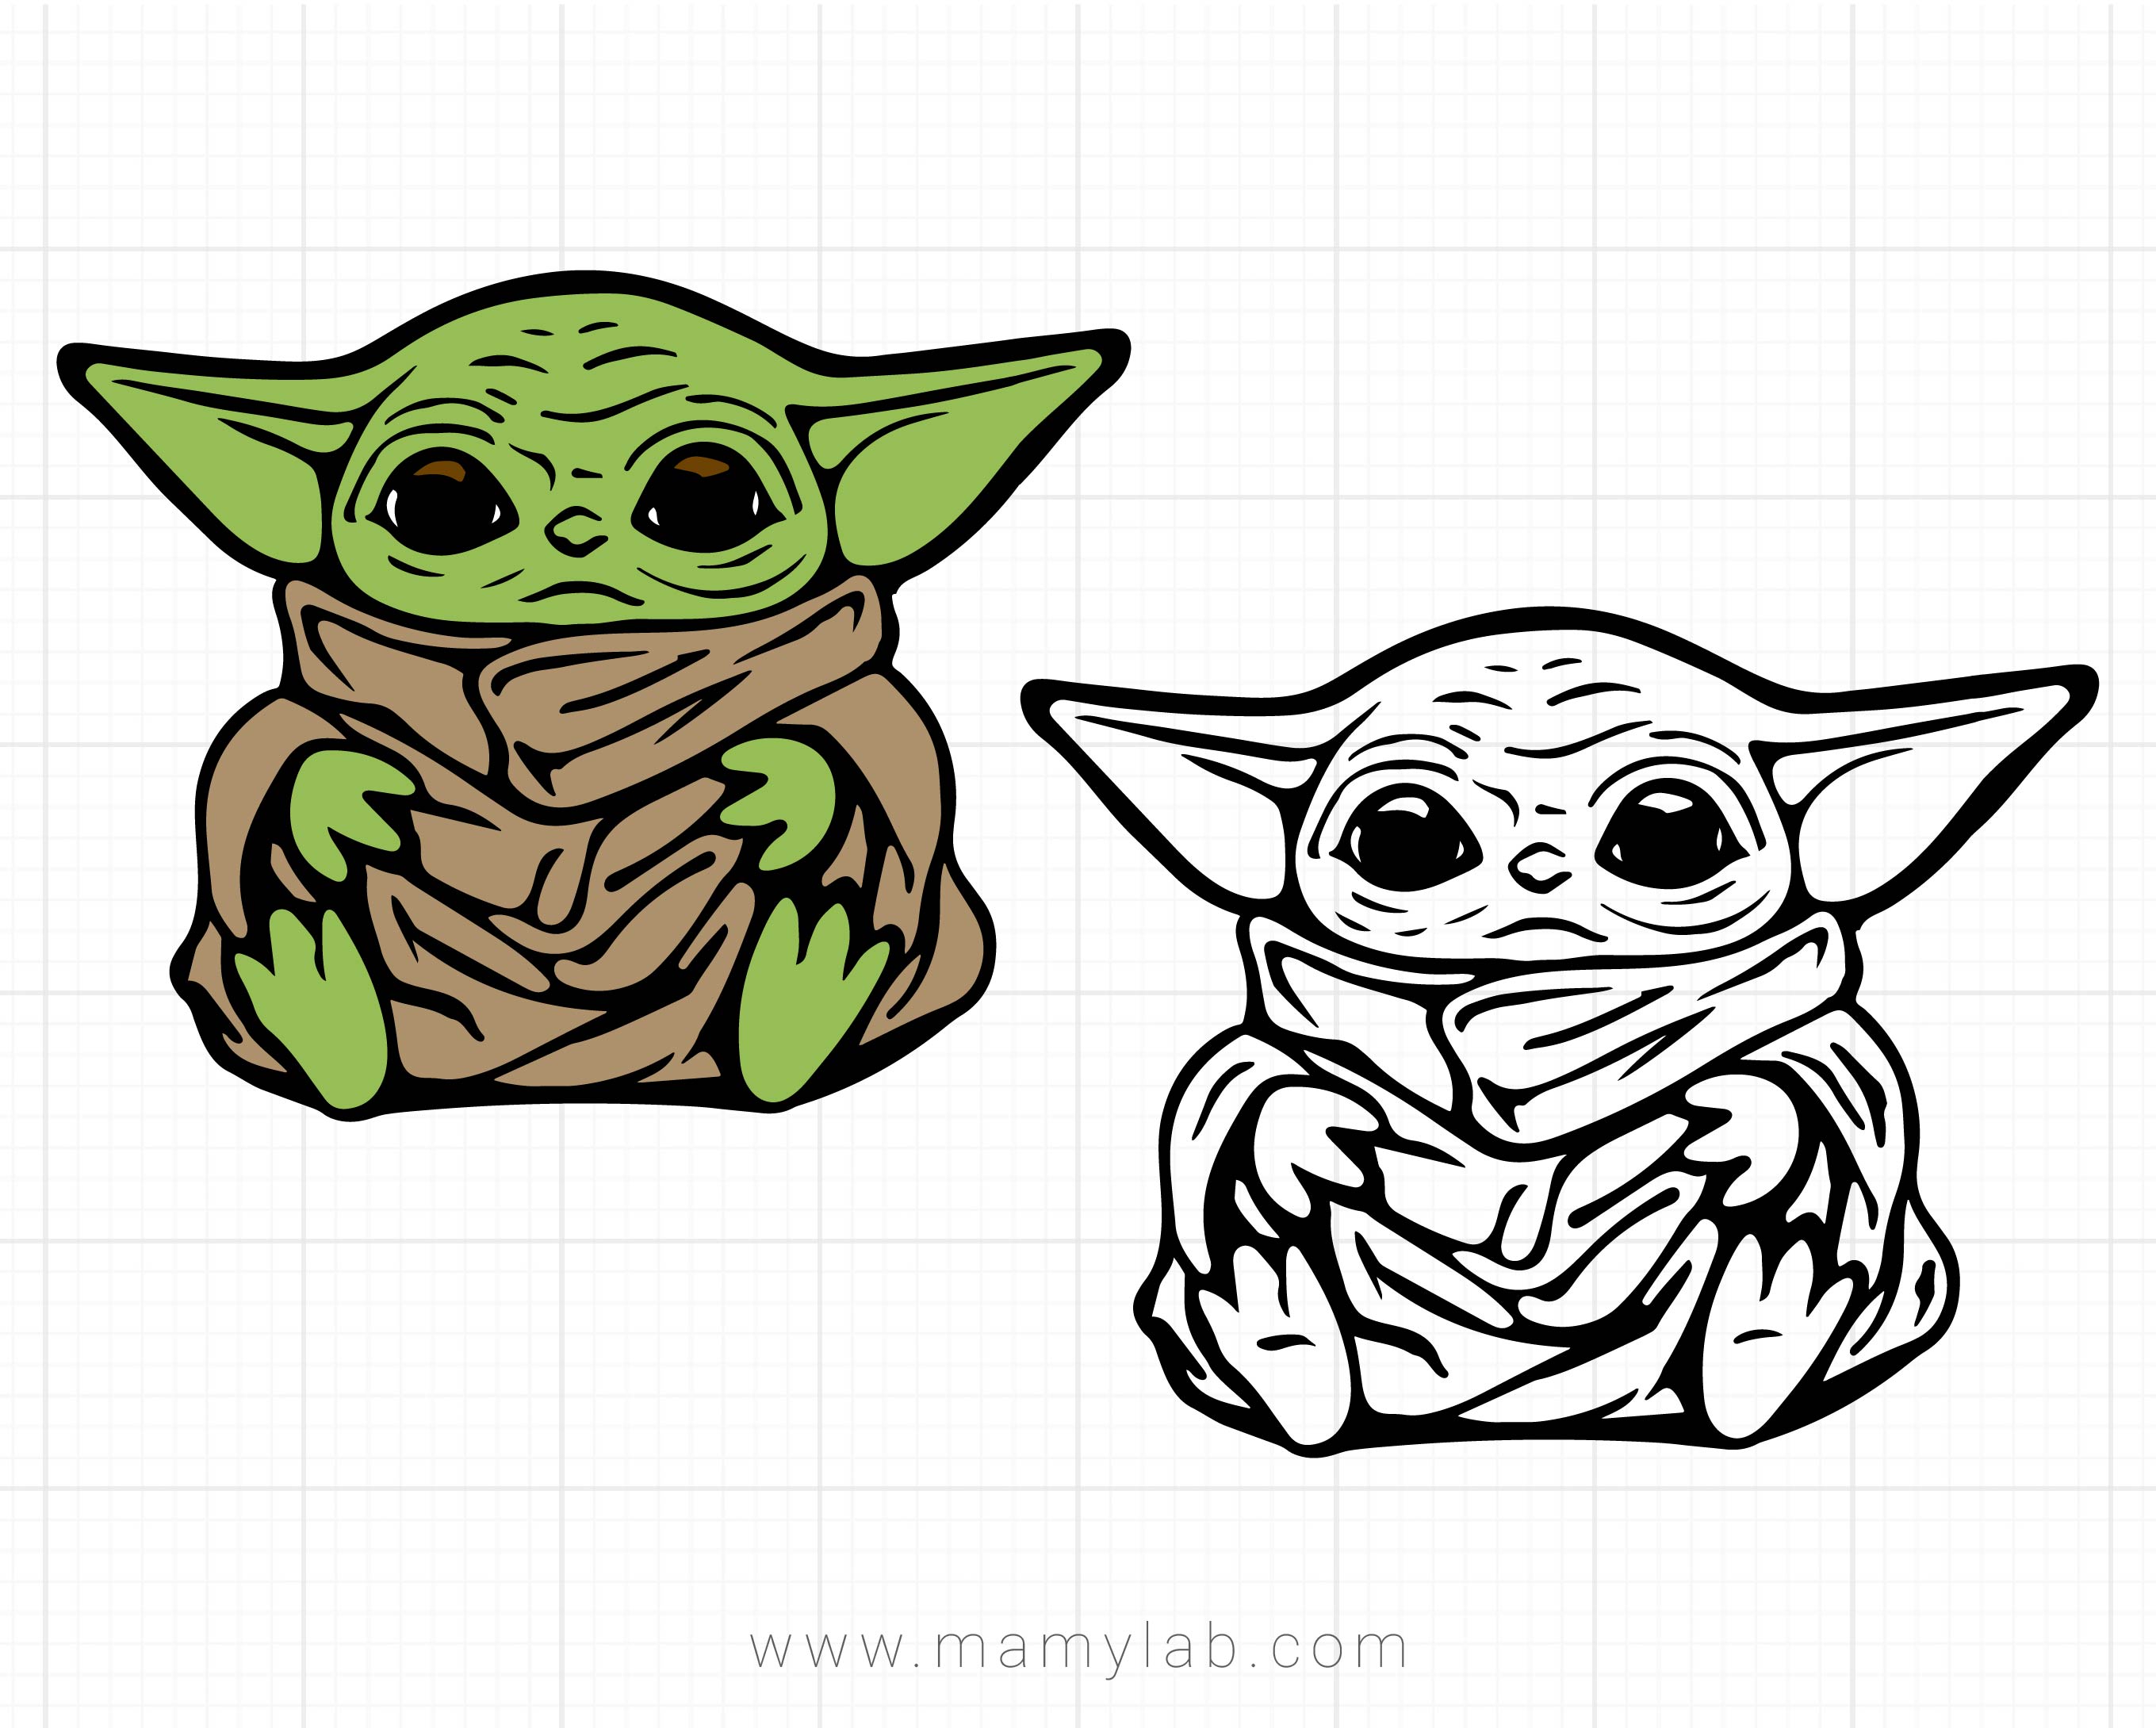 Baby Yoda Illustration Vector - Free Premium Vector Download